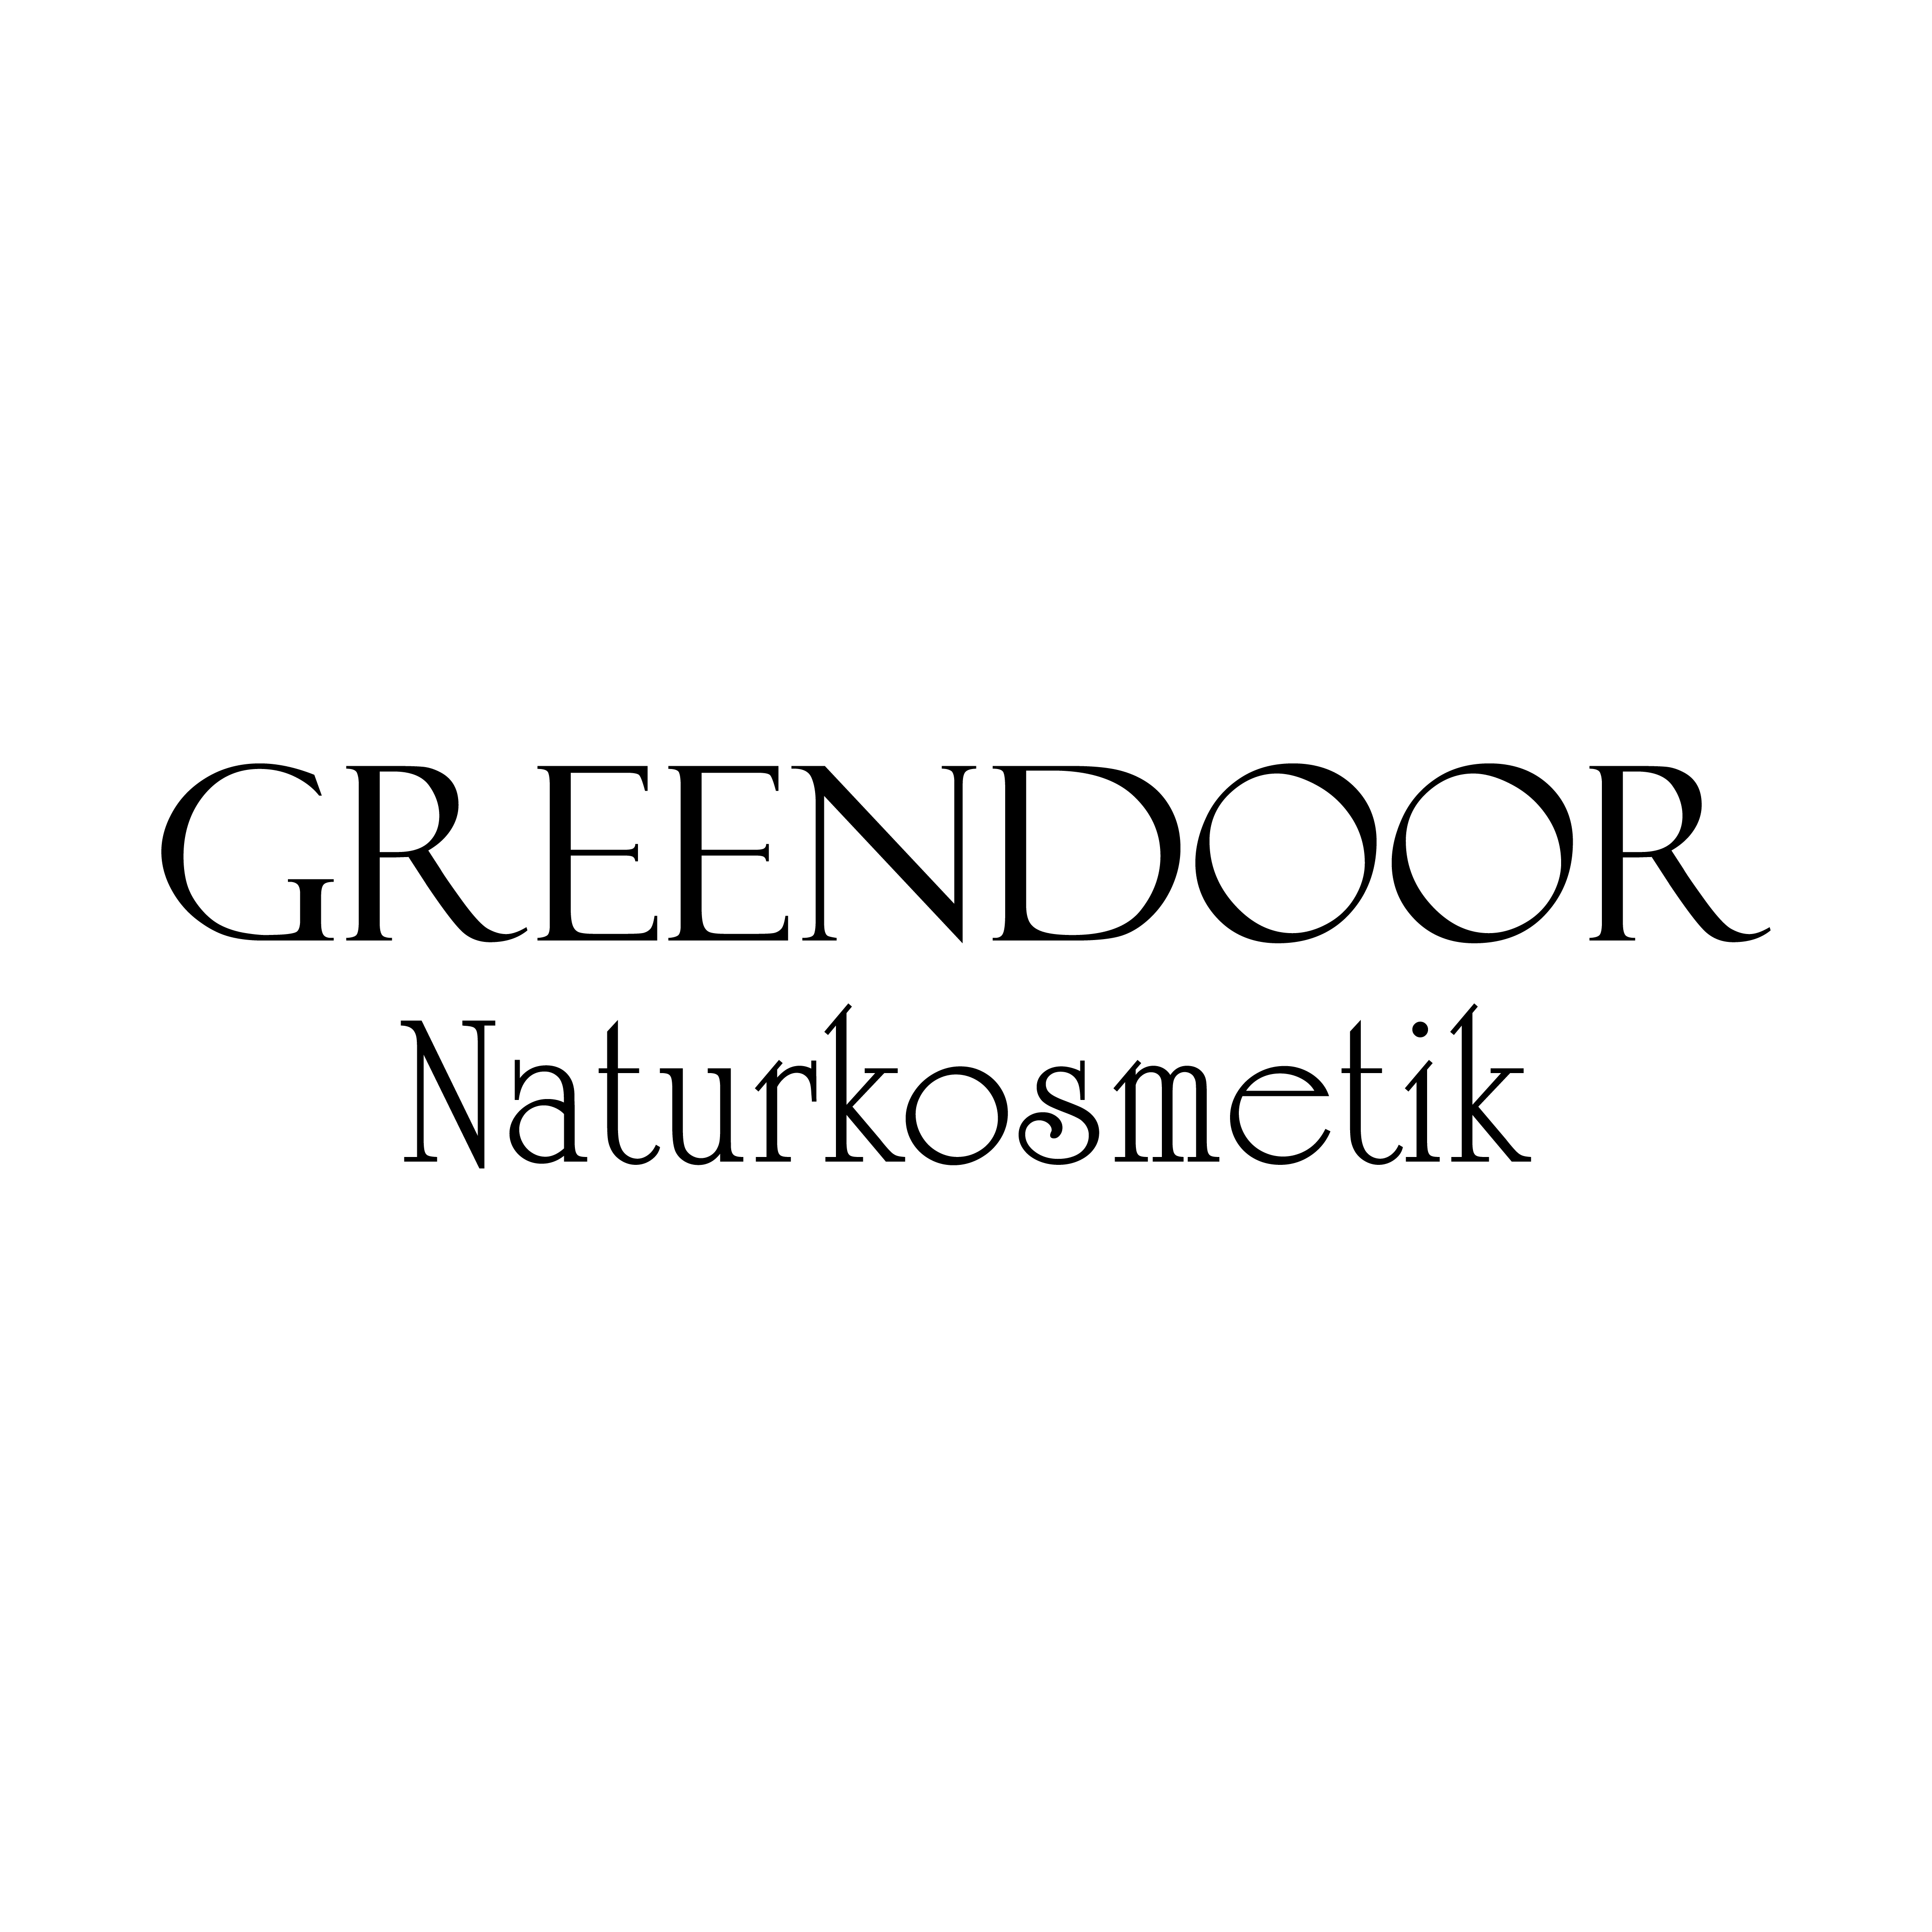 Greendoor Naturkosmetik GmbH